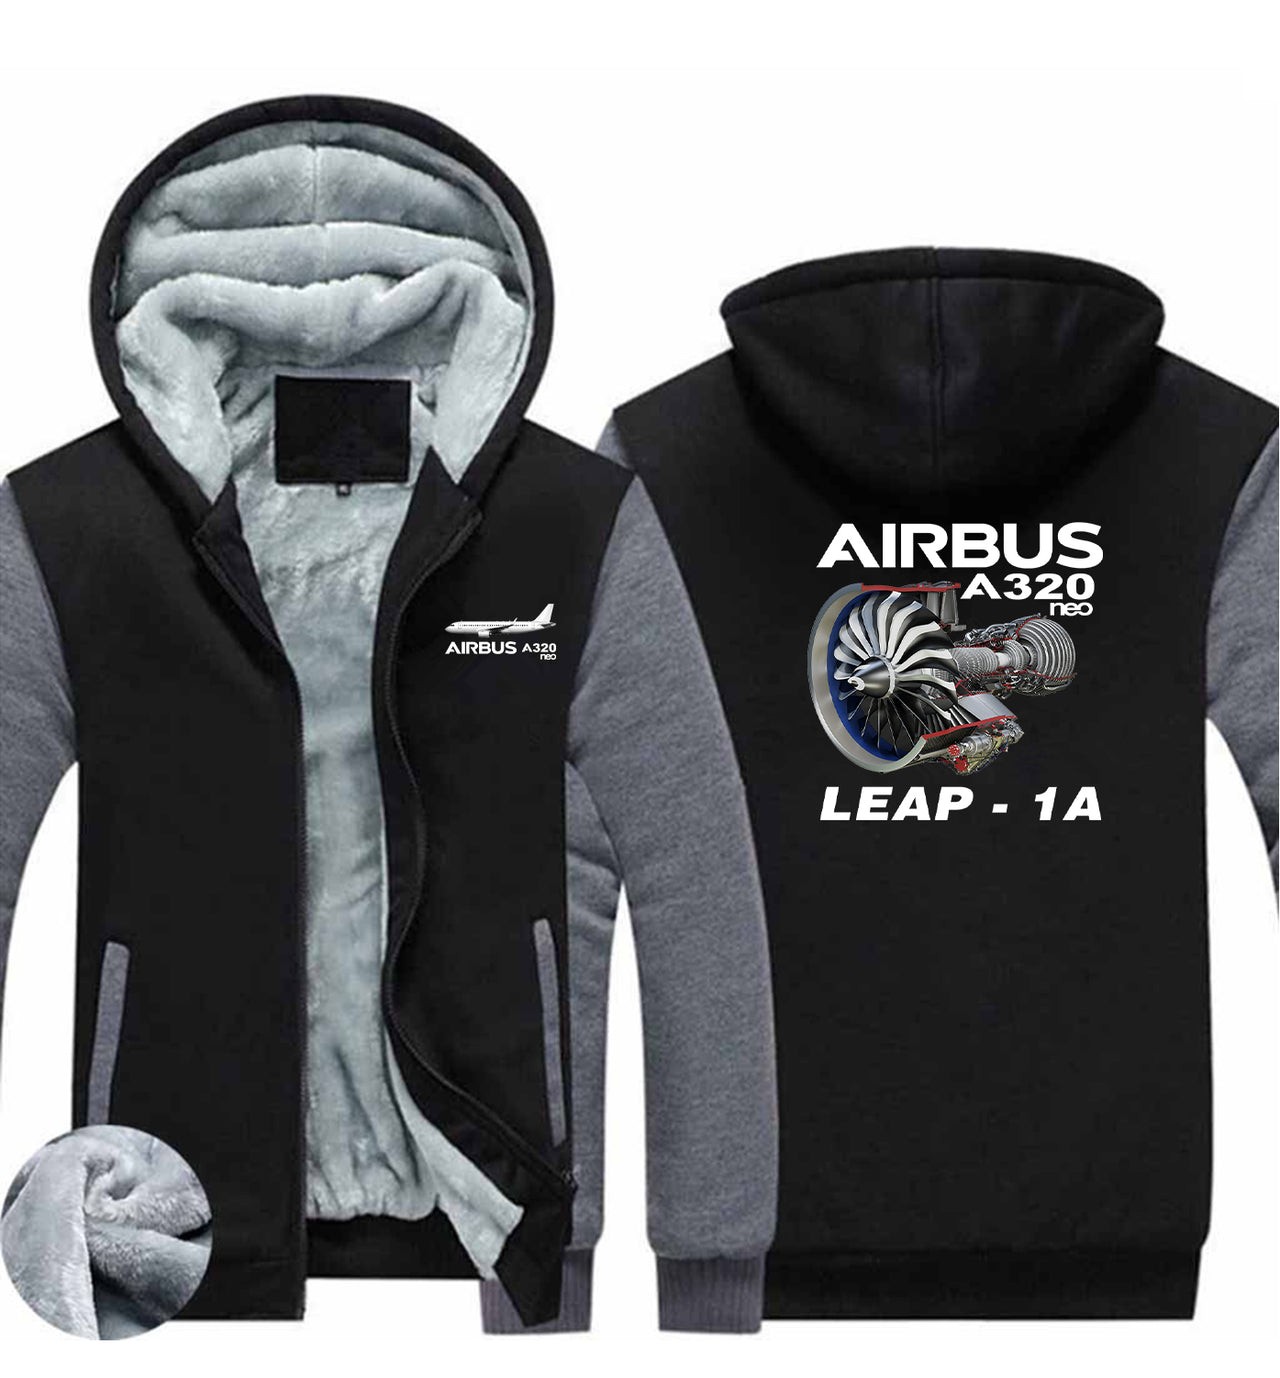 Airbus A320neo & Leap 1A Designed Zipped Sweatshirts